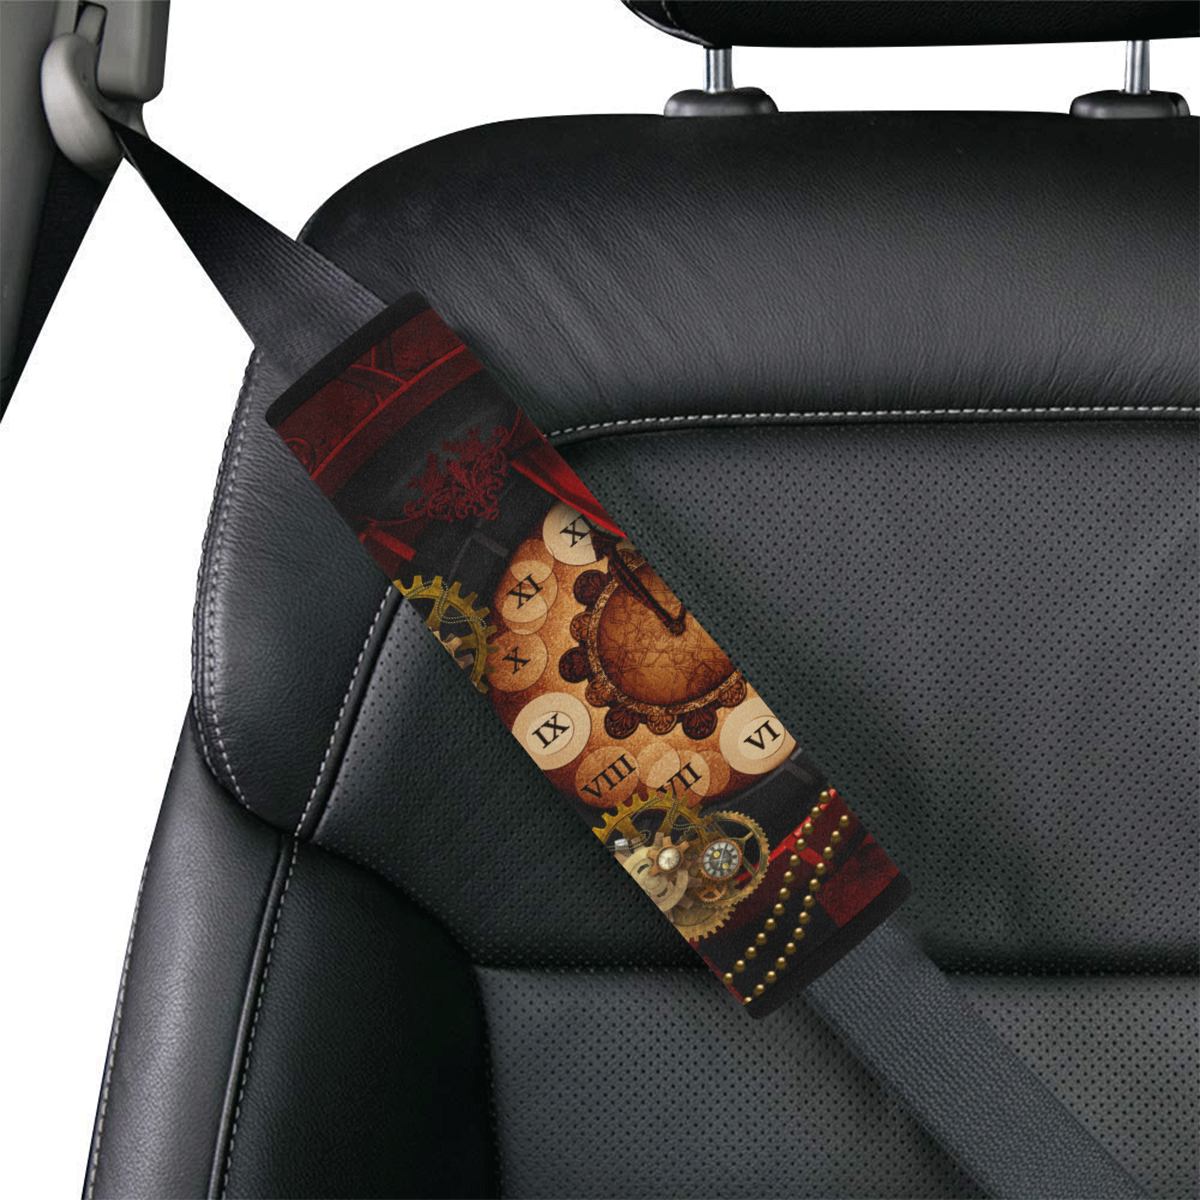 Steampunk, wonderful clockwork Car Seat Belt Cover 7''x10''